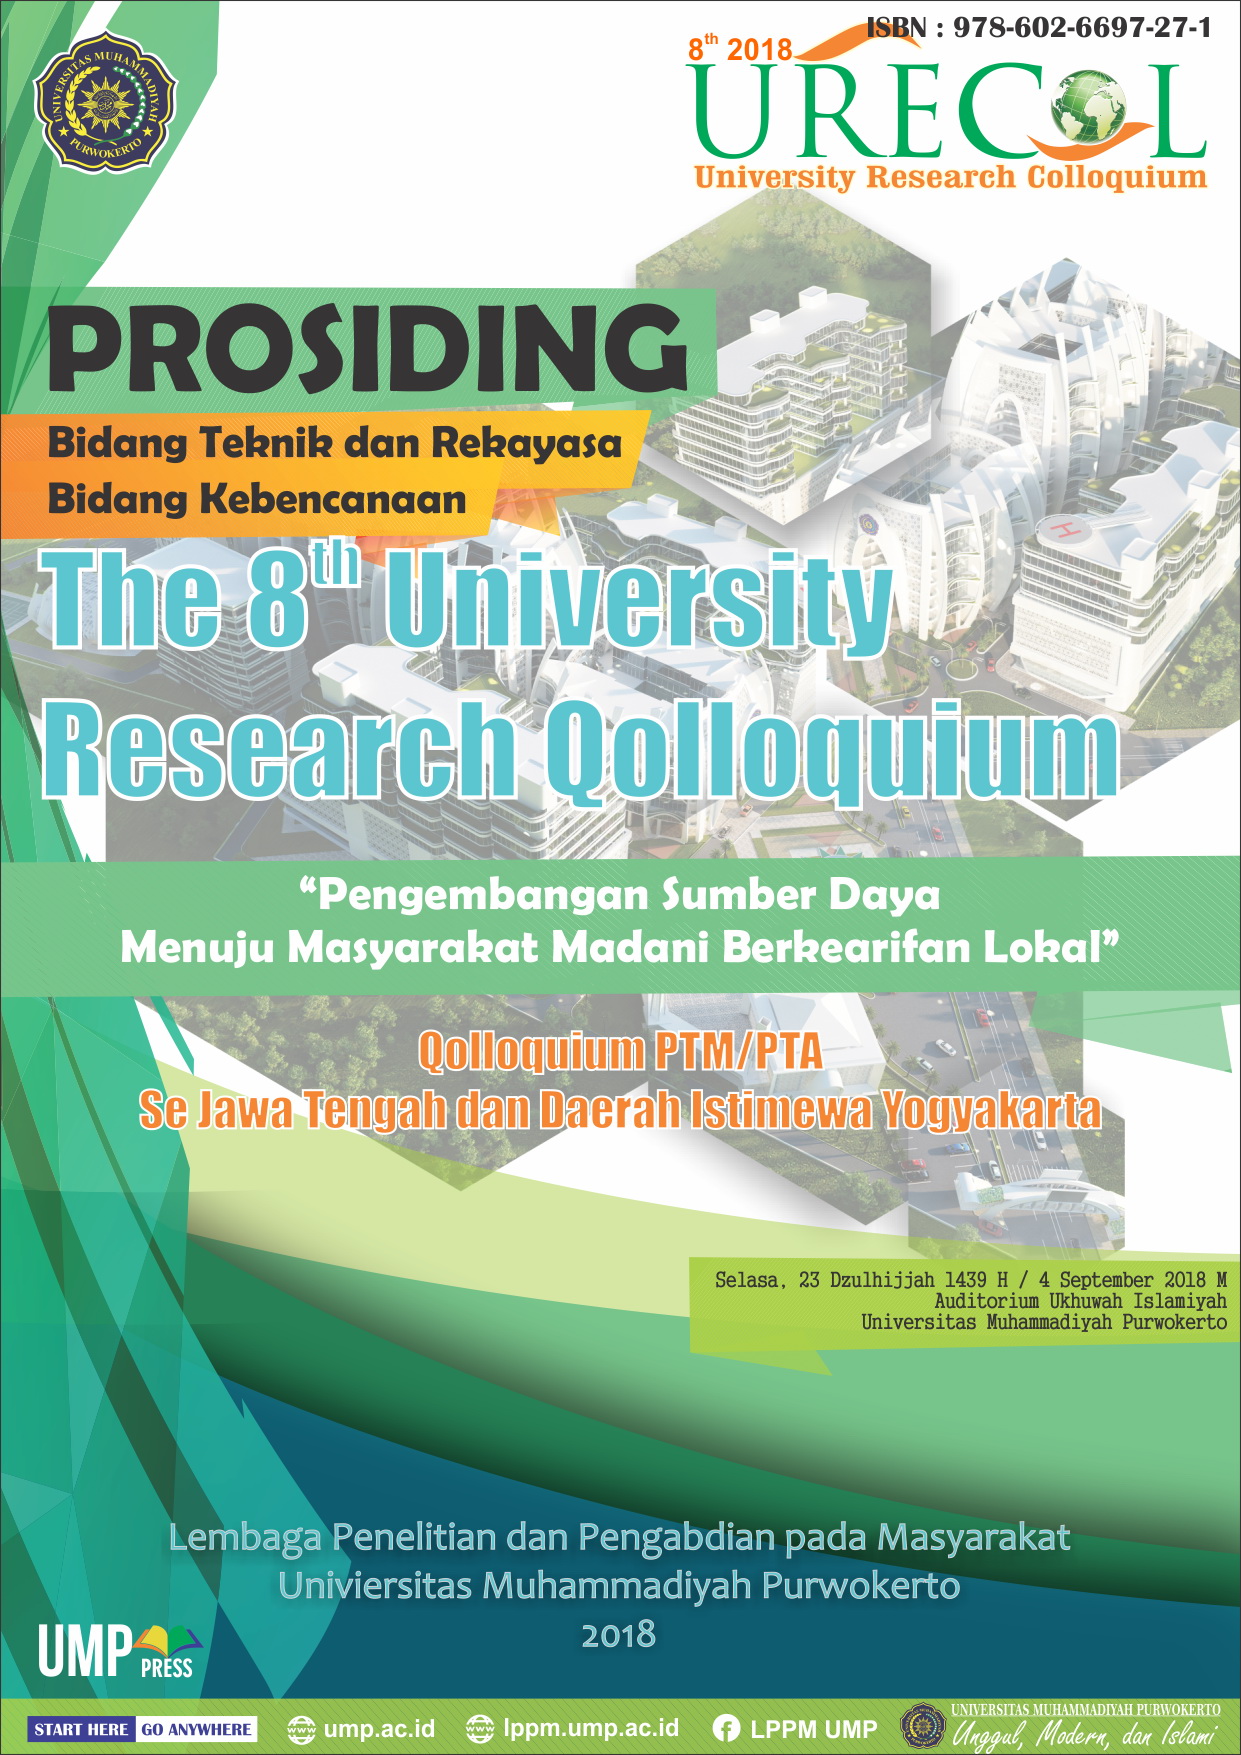 					View Proceeding of The 8th University Research Colloquium 2018: Bidang Teknik dan Rekayasa & Bidang Teknik Kebencanaan
				